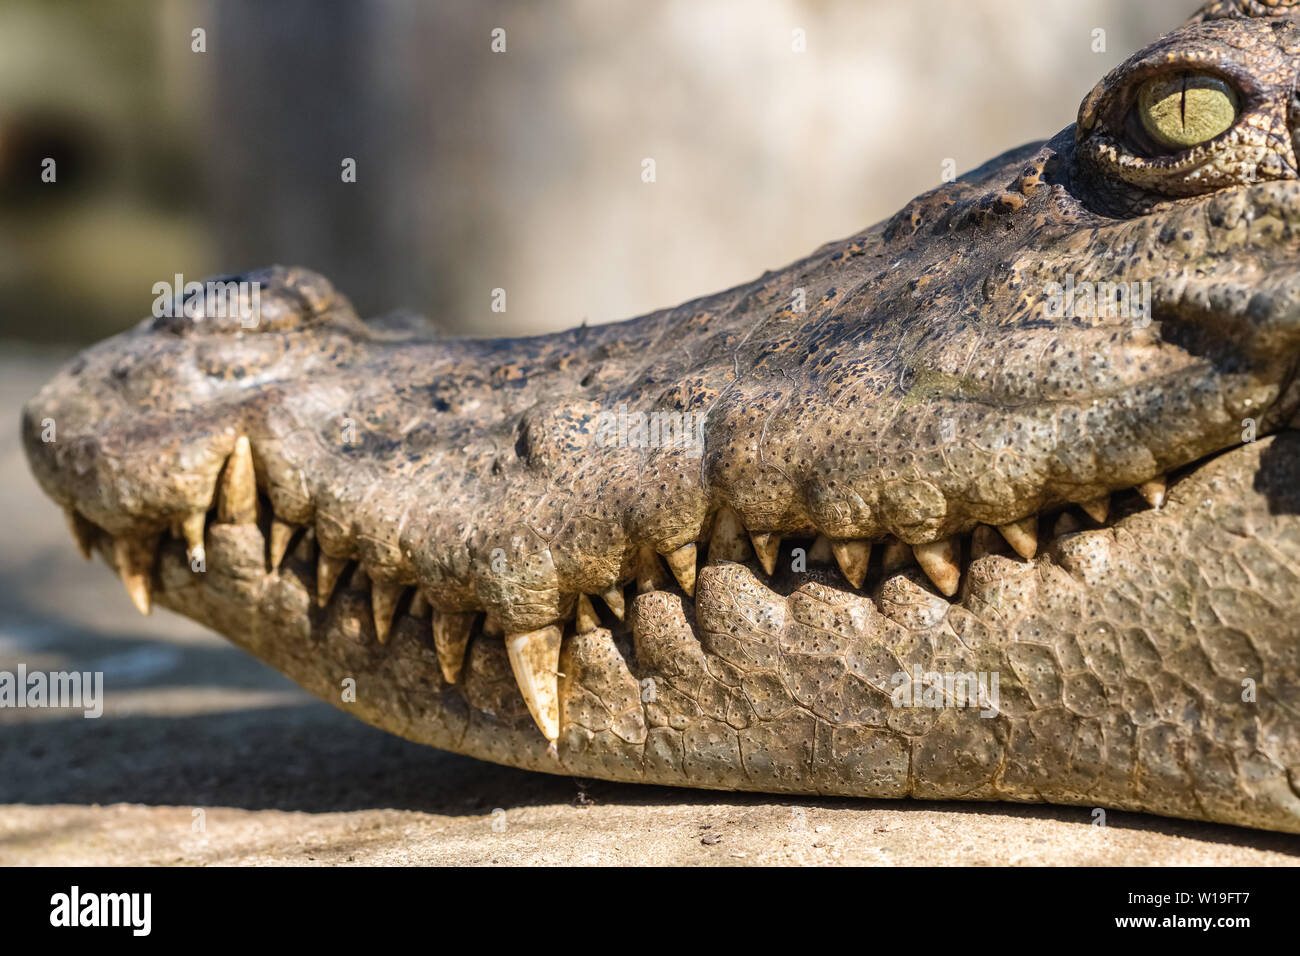 Close-up head of a crocodile Stock Photo